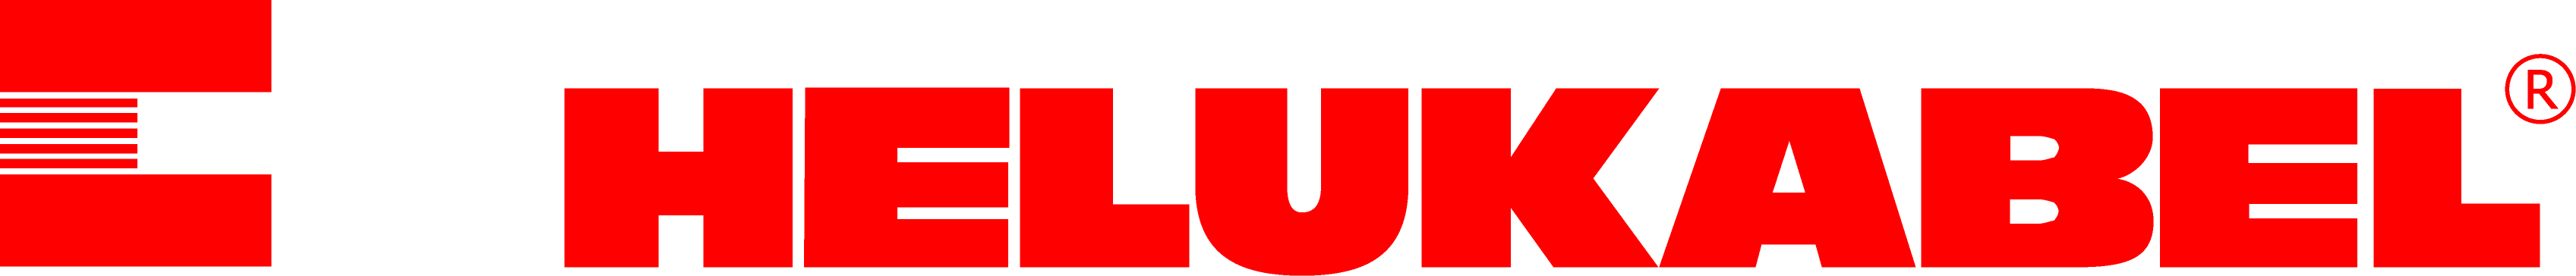 Logo Vertriebspartner